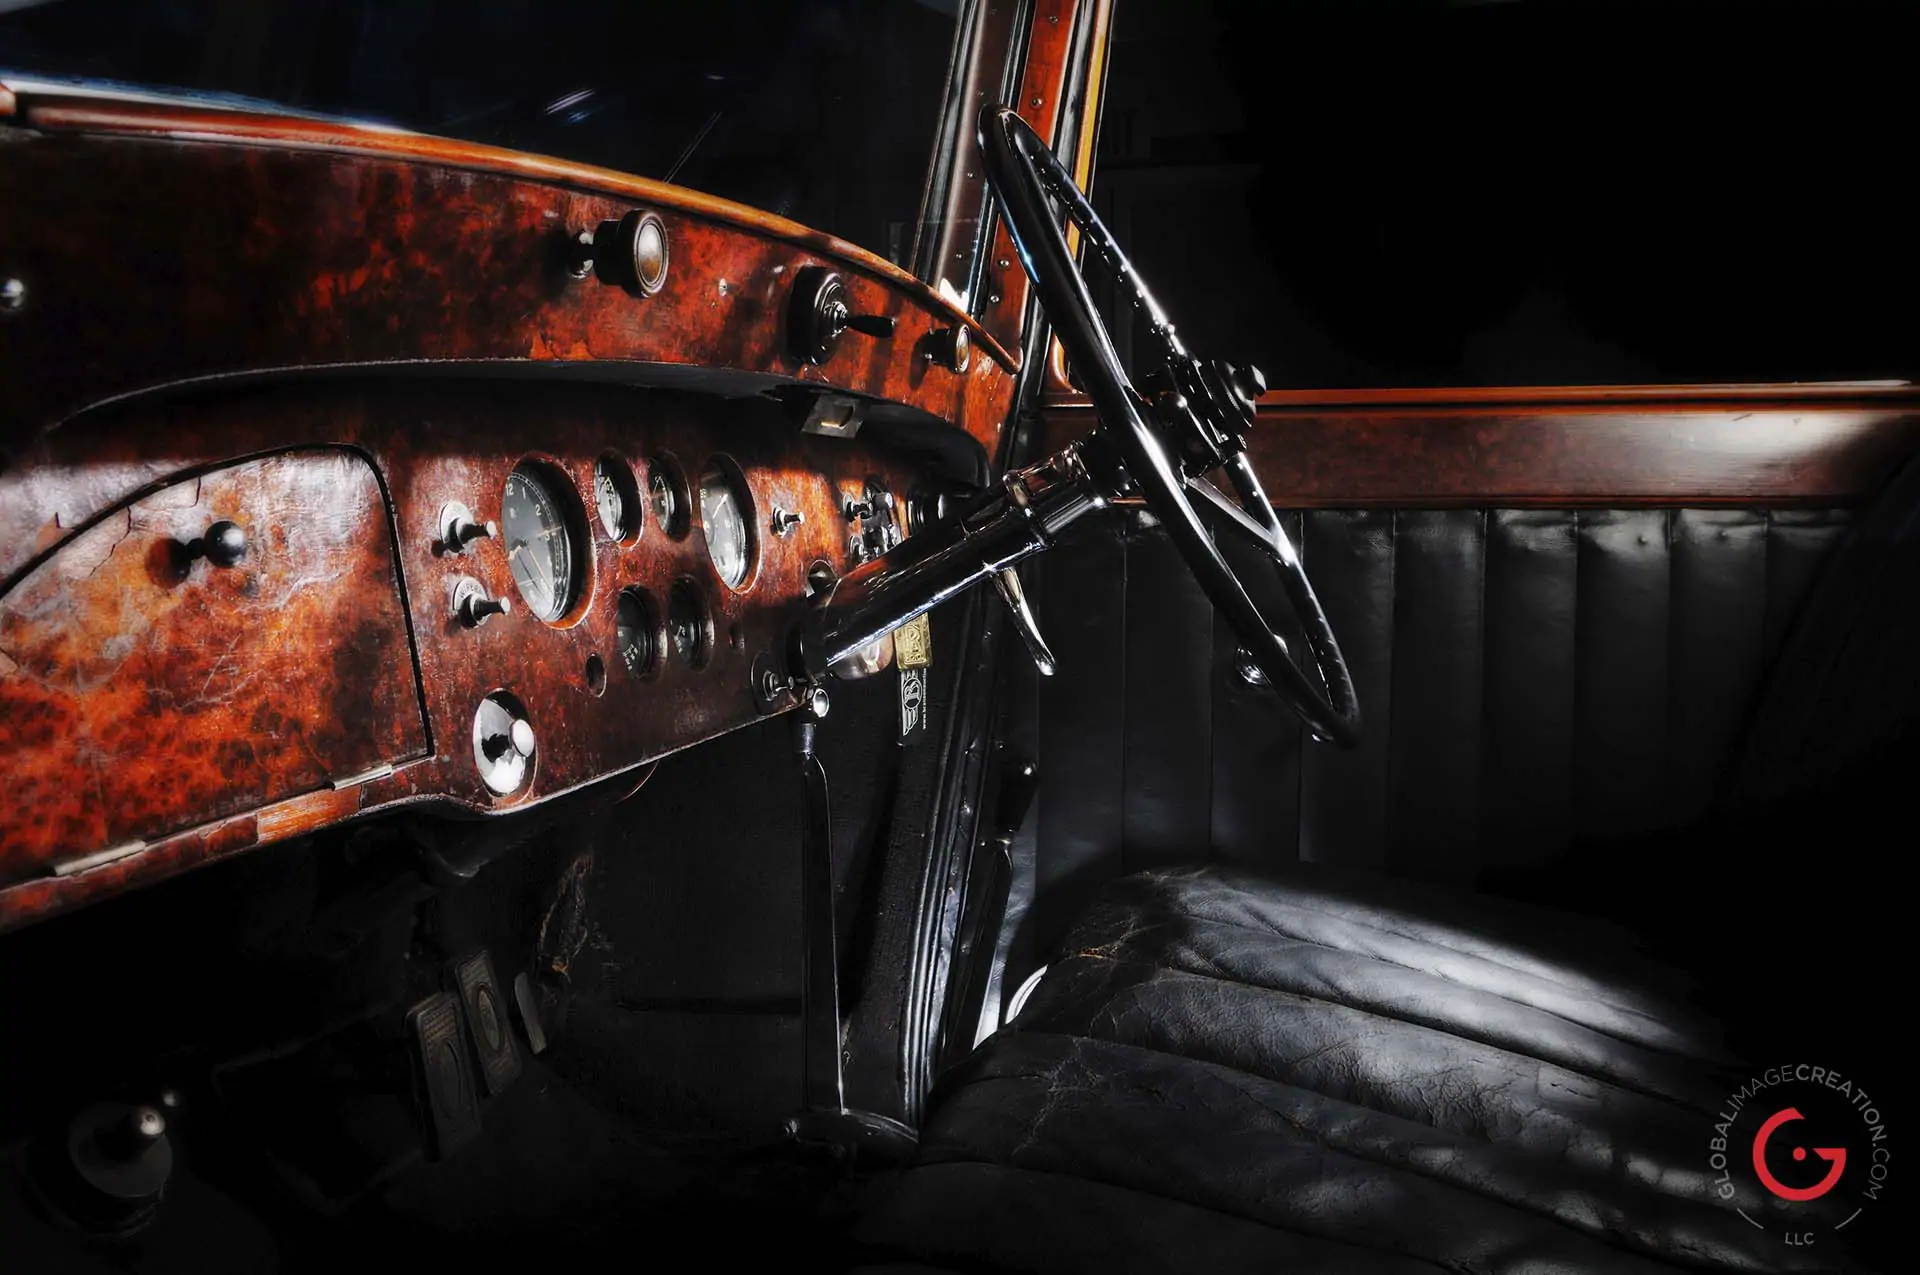 Classic Rolls Royce Interior Detail - All Original - Professional Car Photographer, Automotive Photography